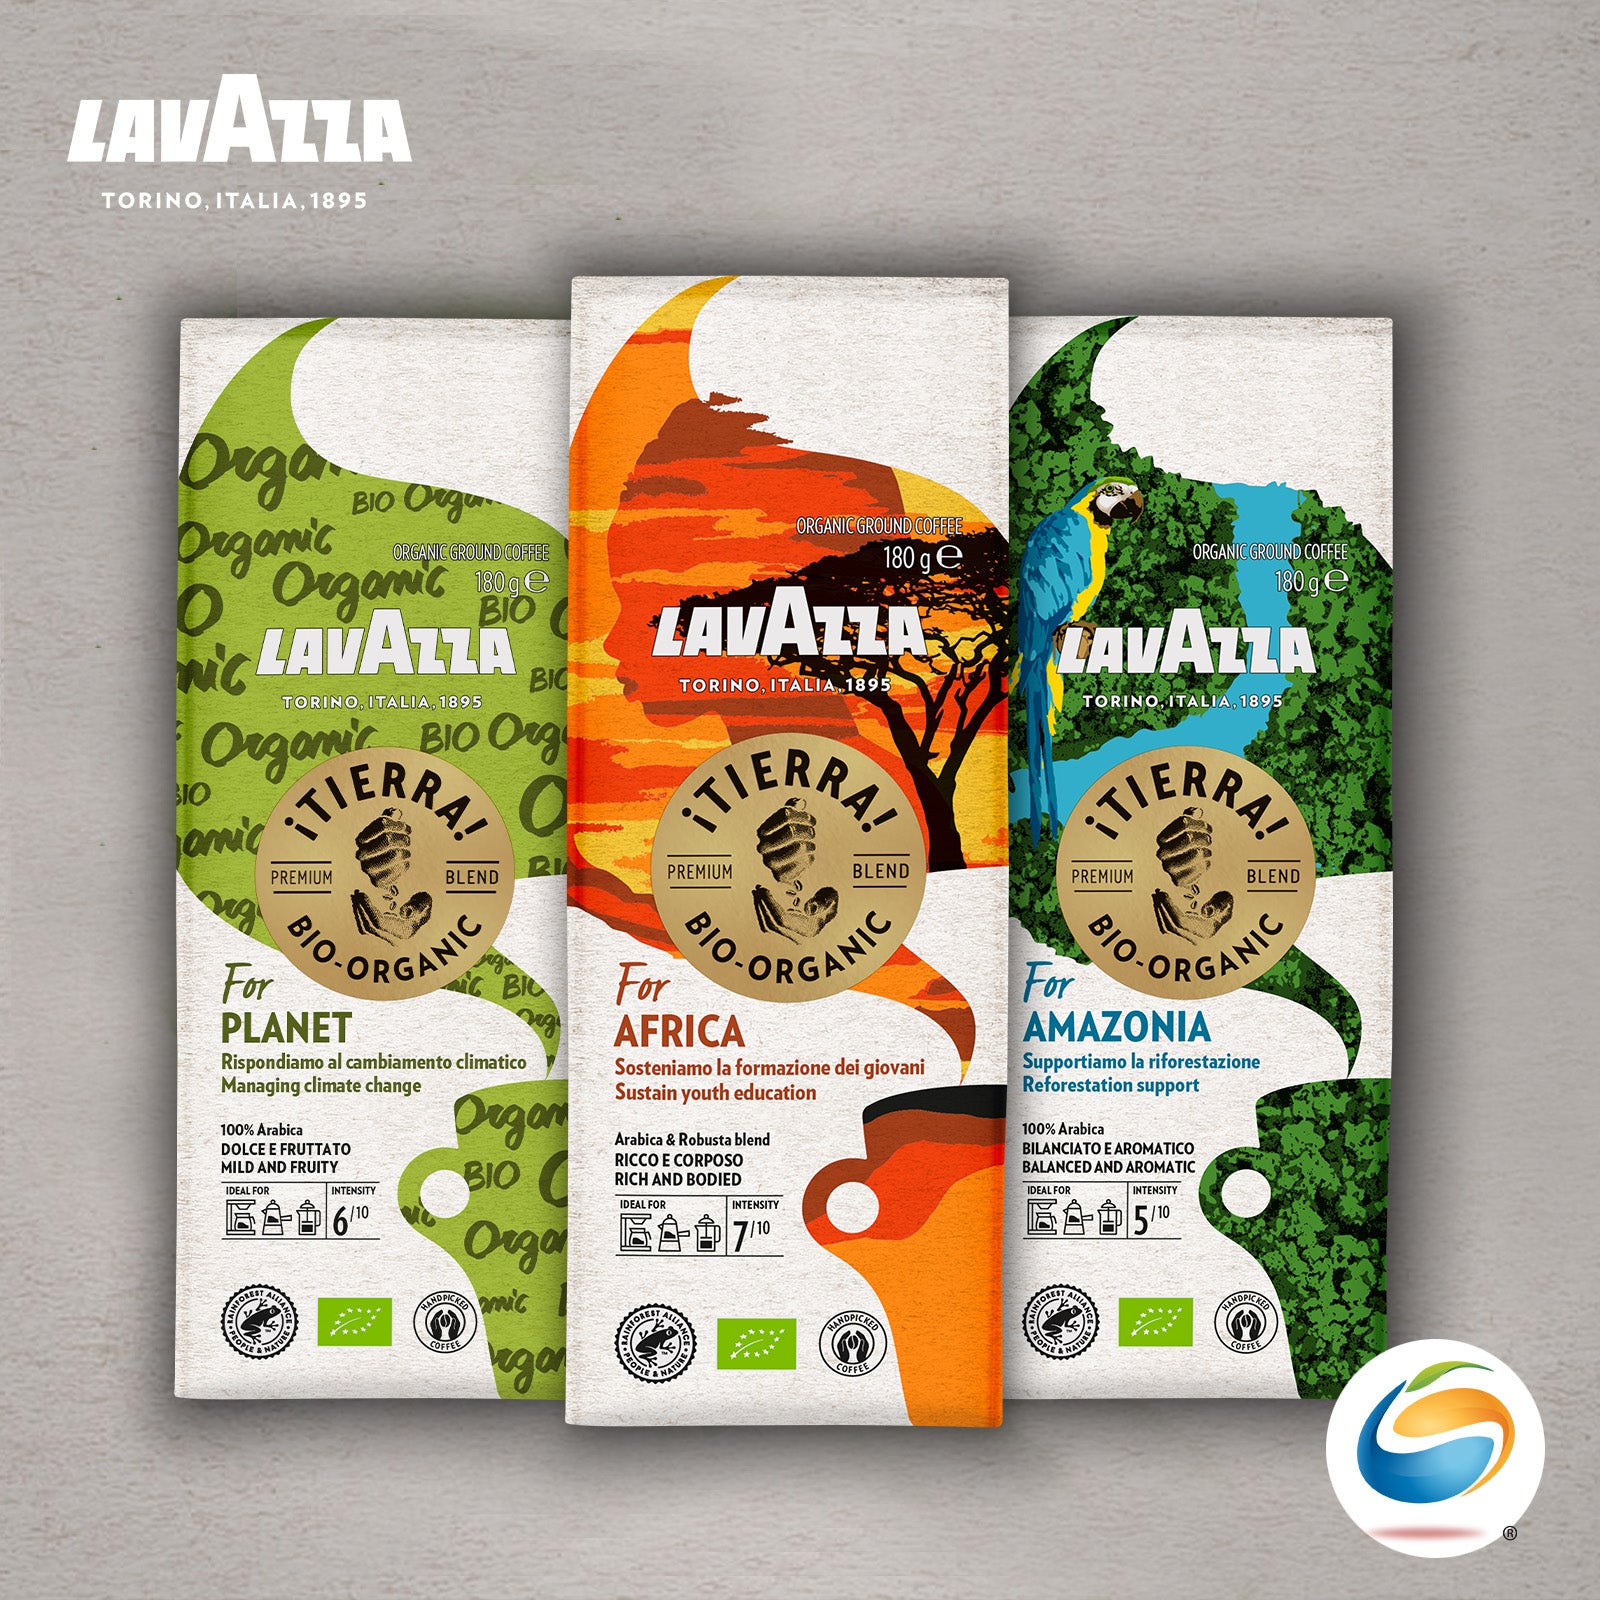 LAVAZZA ¡Tierra! Organic Ground Coffee 180G